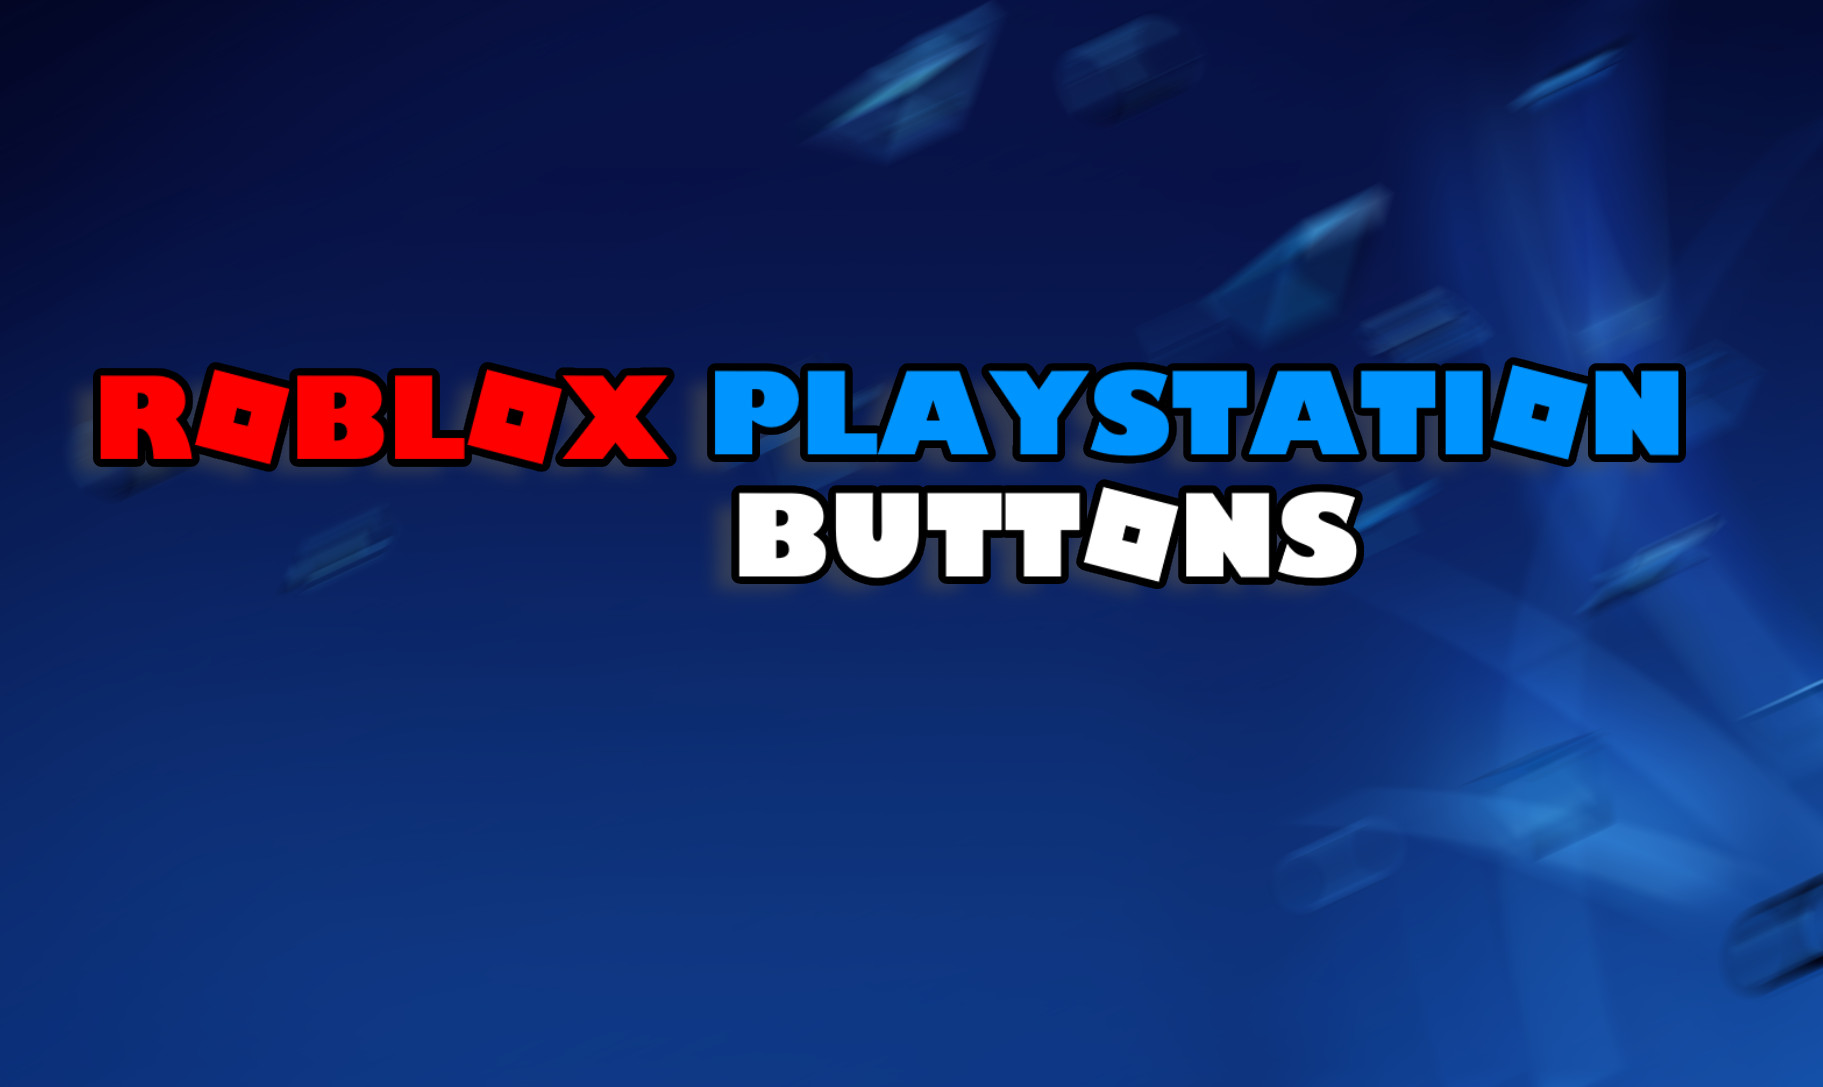 Roblox registra grande lançamento no PlayStation